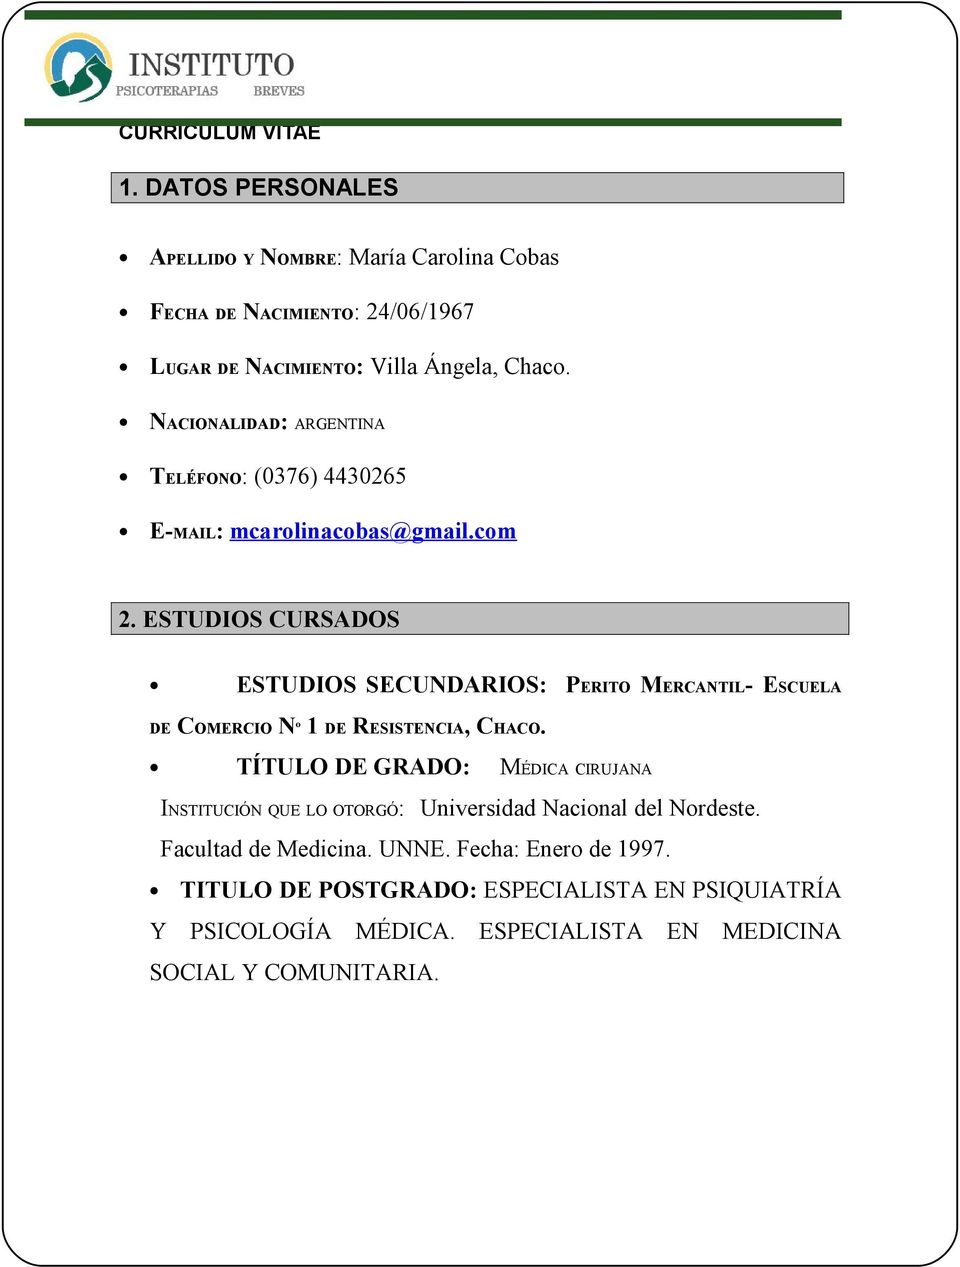 ESTUDIOS CURSADOS ESTUDIOS SECUNDARIOS: PERITO MERCANTIL- ESCUELA DE COMERCIO Nº 1 DE RESISTENCIA, CHACO.